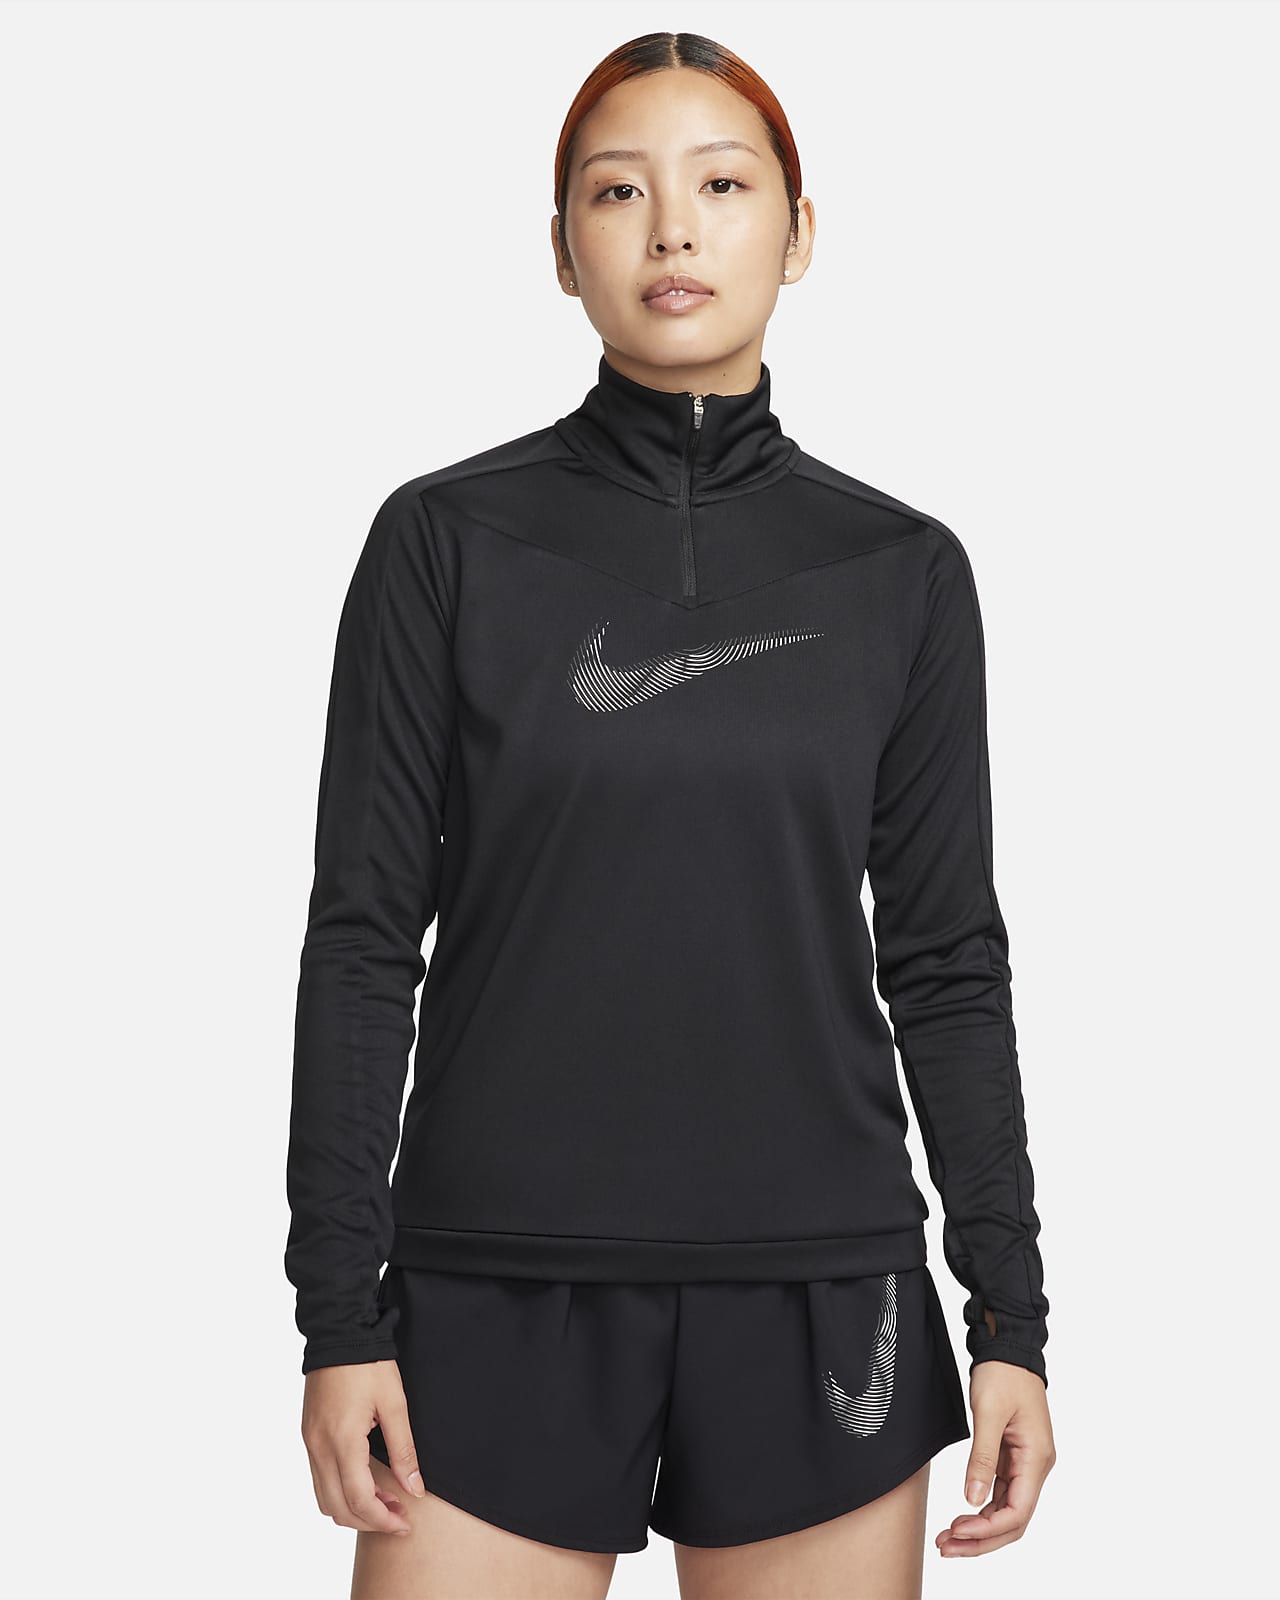 Nike Dri-FIT Swoosh Women's 1/4-Zip Running Top